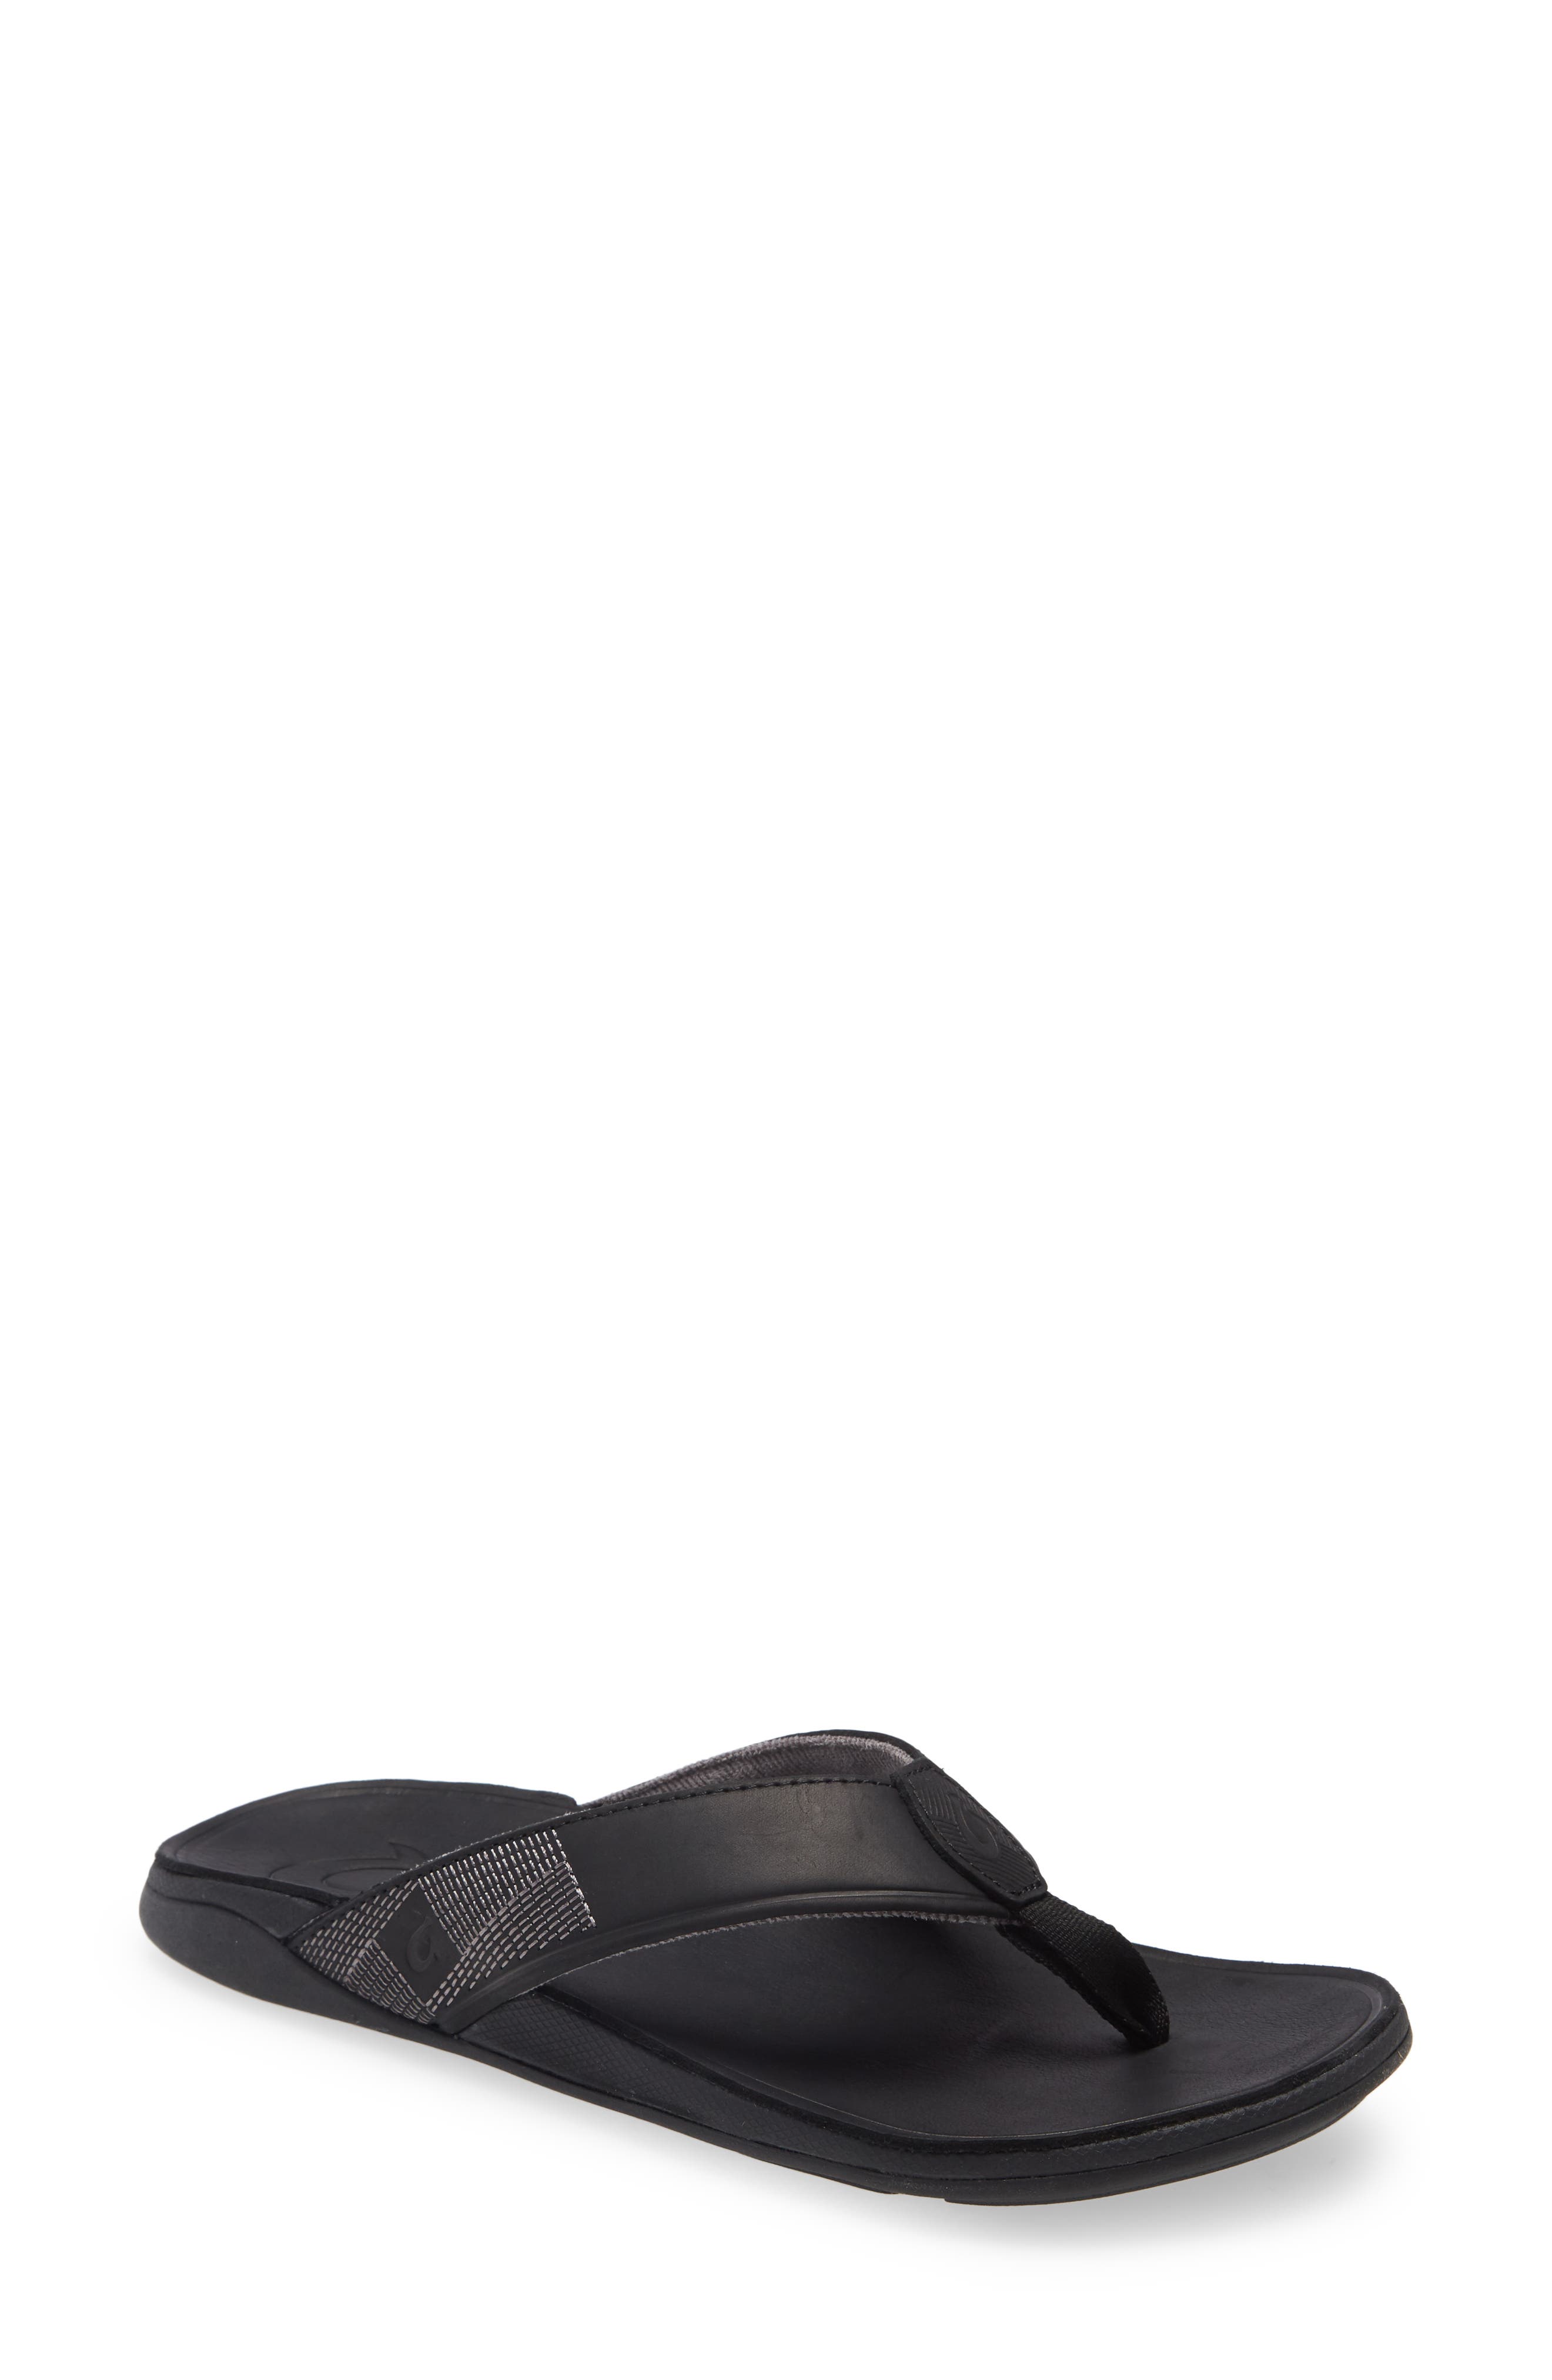 NEW Mens Sandals Medium 9 Black Flip Flops Sport Slides Summer Shoes Pool 